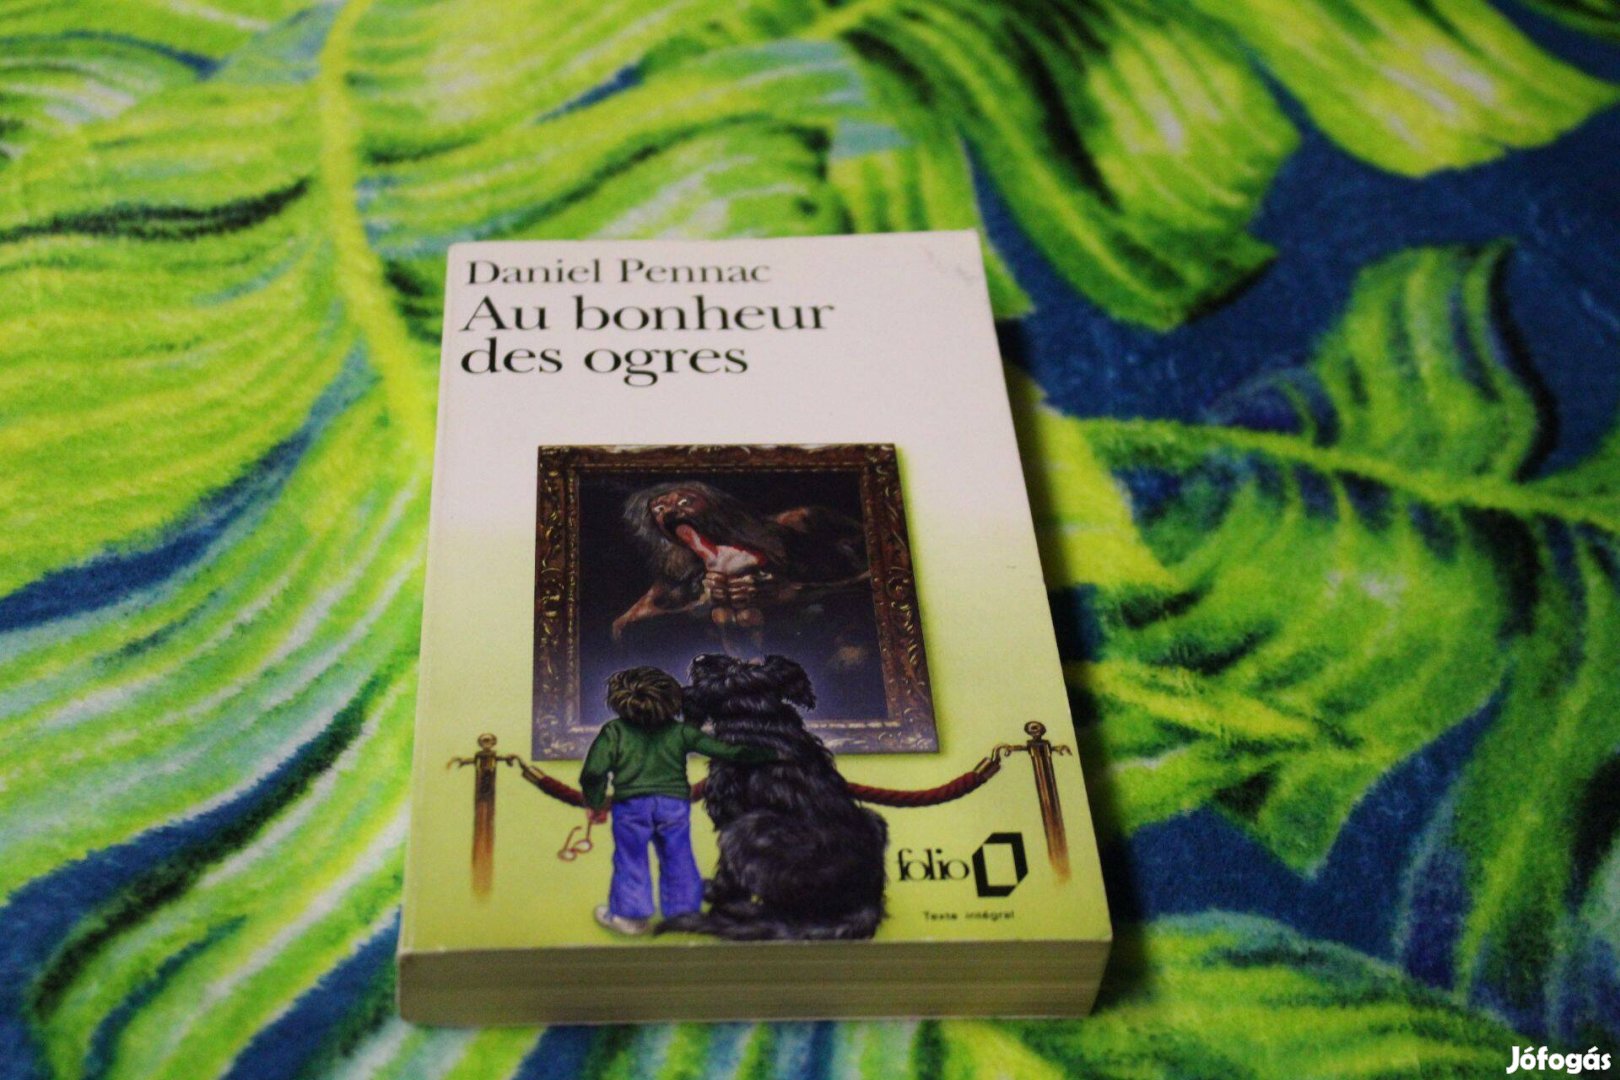 Daniel Pennac- Au bonheur des ogres, franciaul